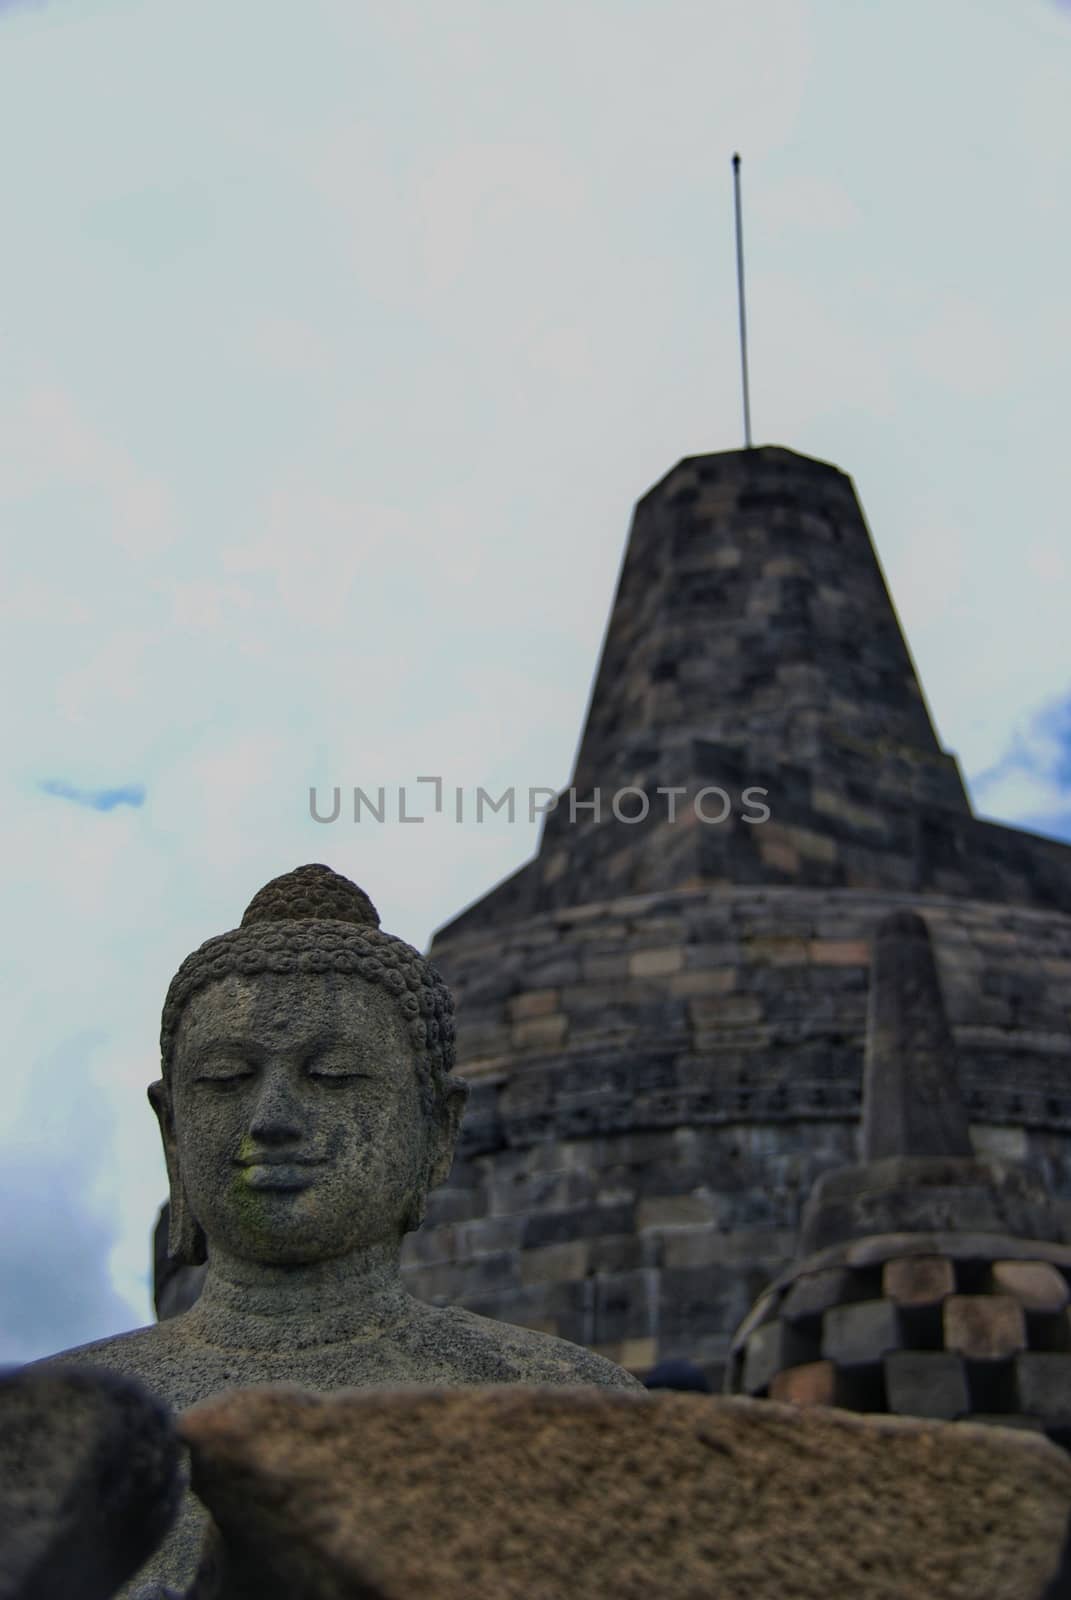 Image of sitting Buddha in Borobudur Temple, Jogjakarta, Indonesia by craigansibin